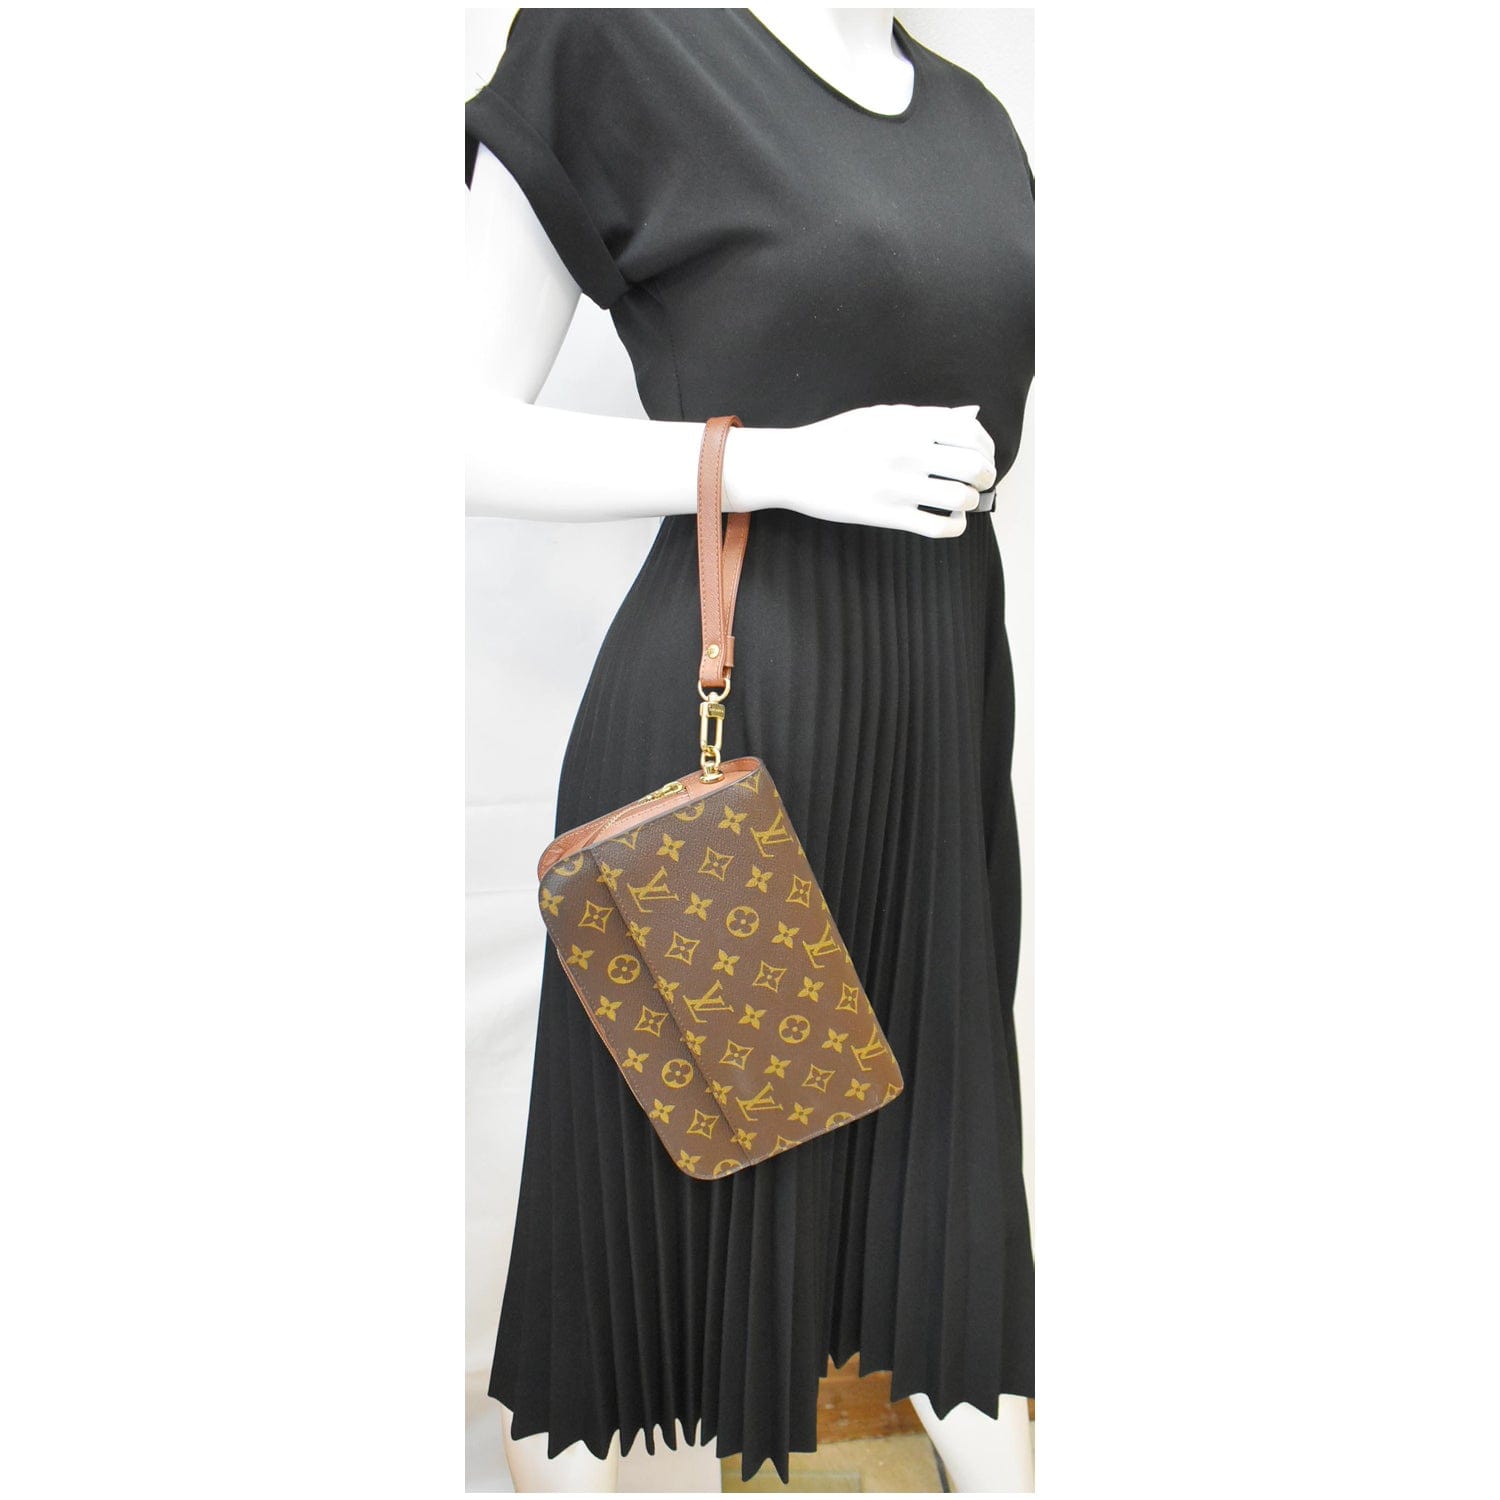 Louis Vuitton Orsay Clutch Bag